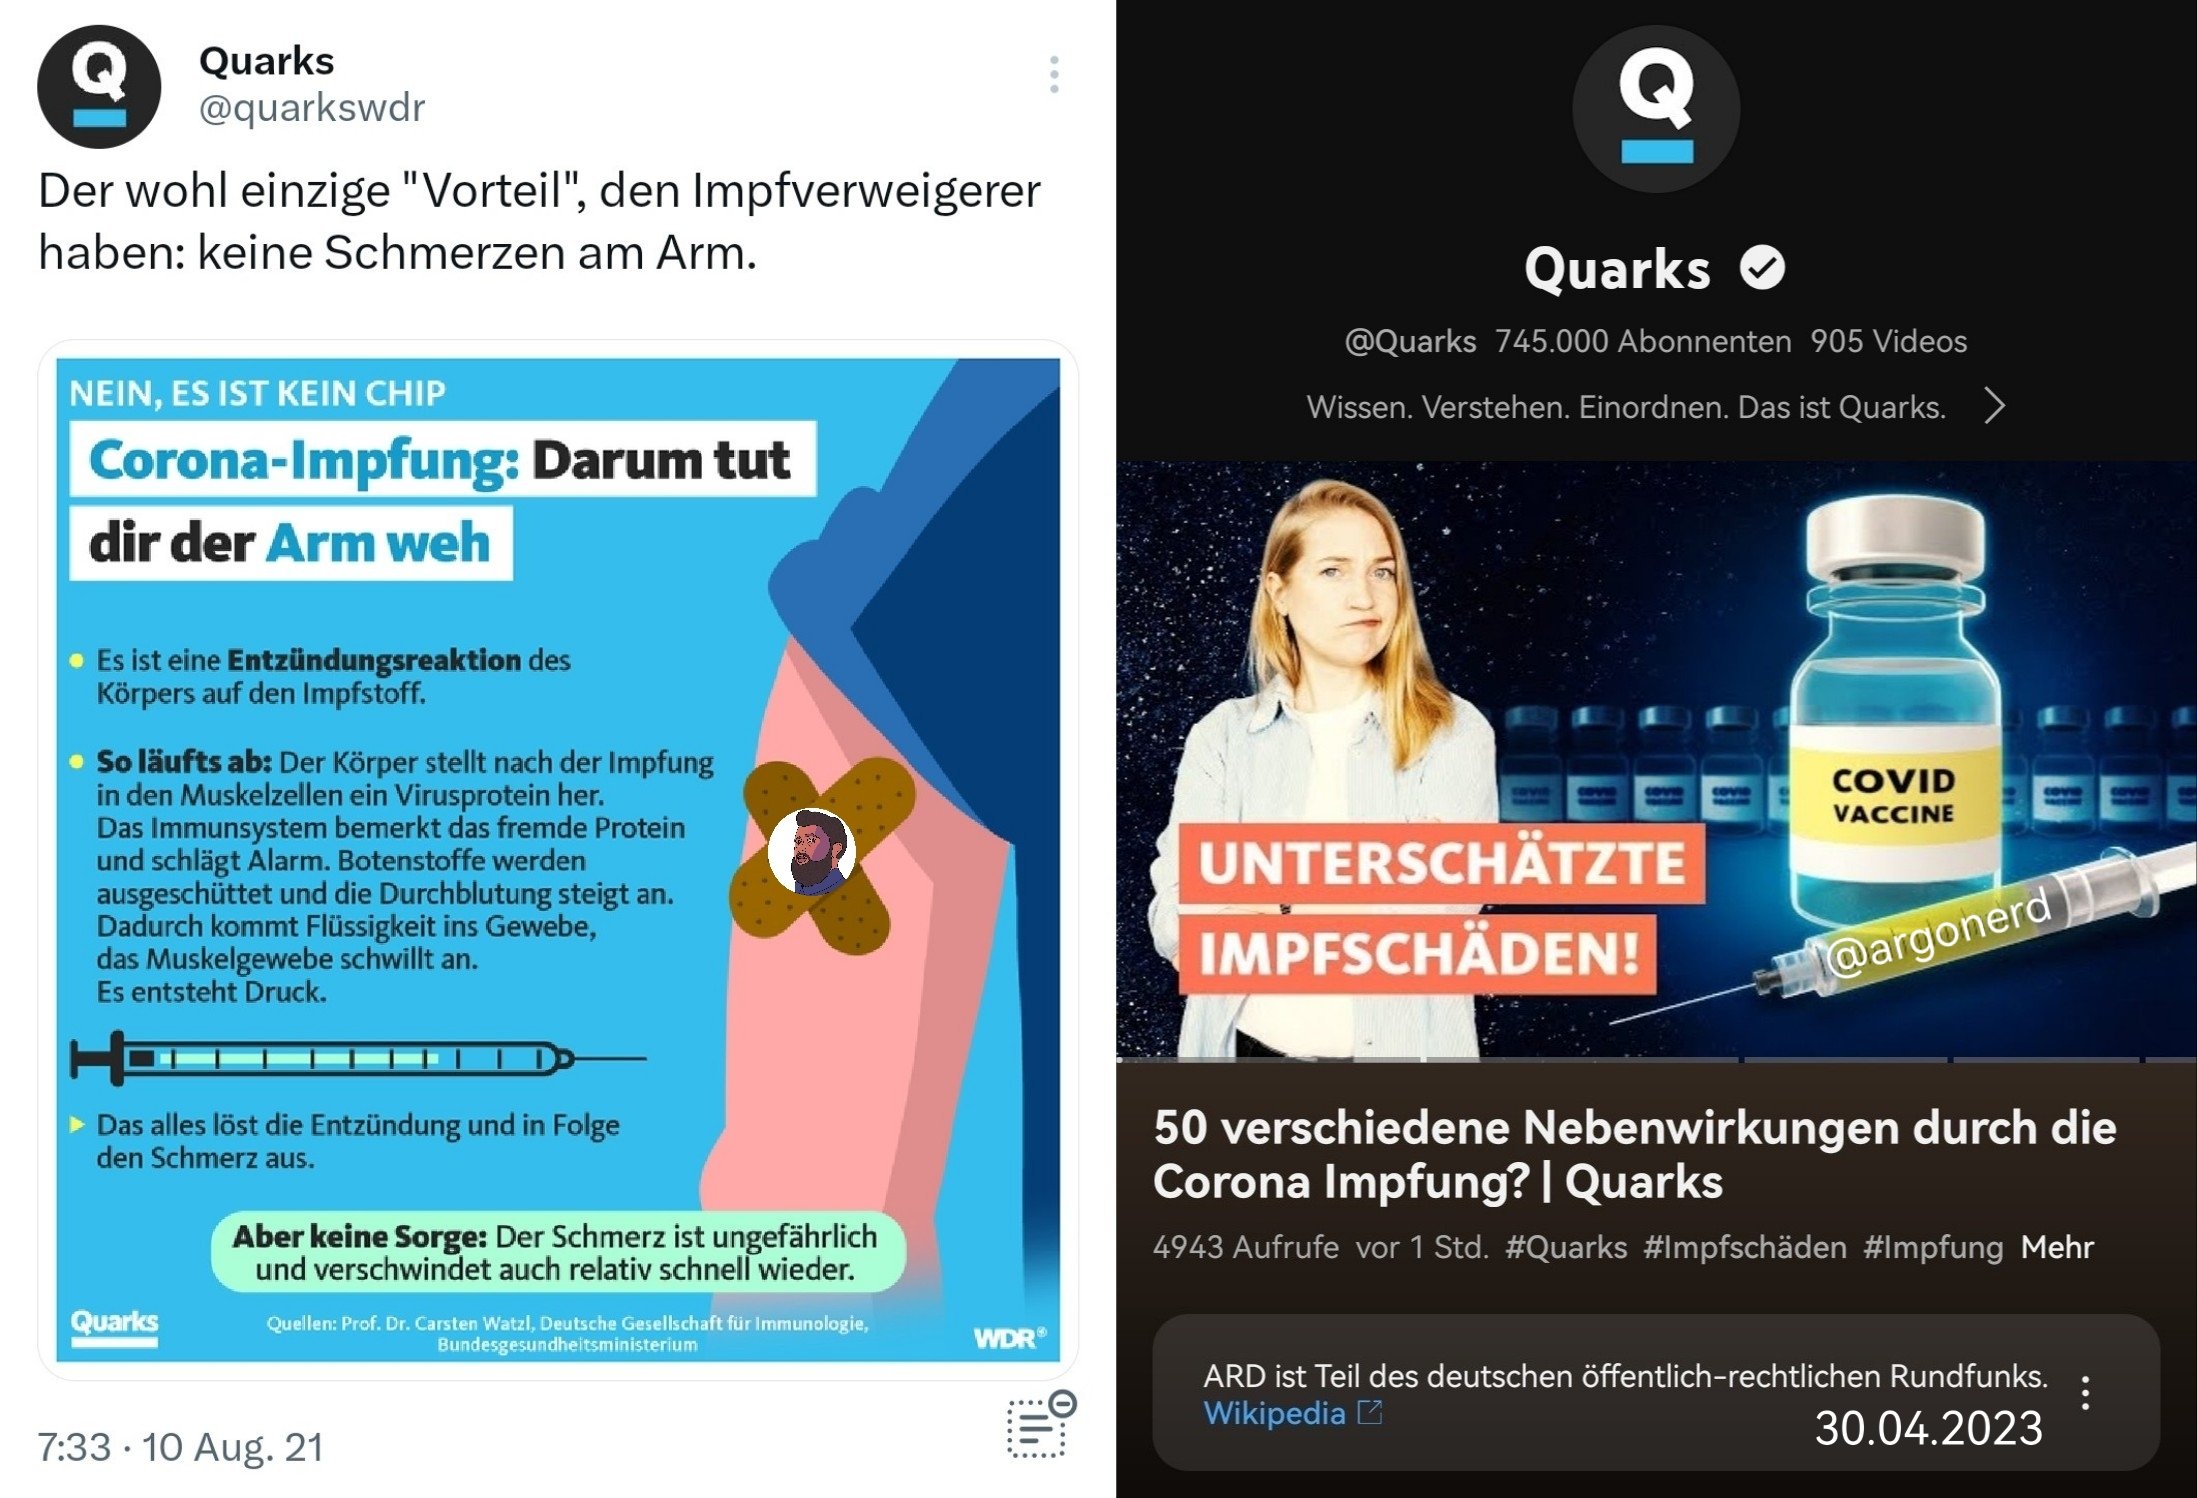 Quarks vs. Quarks